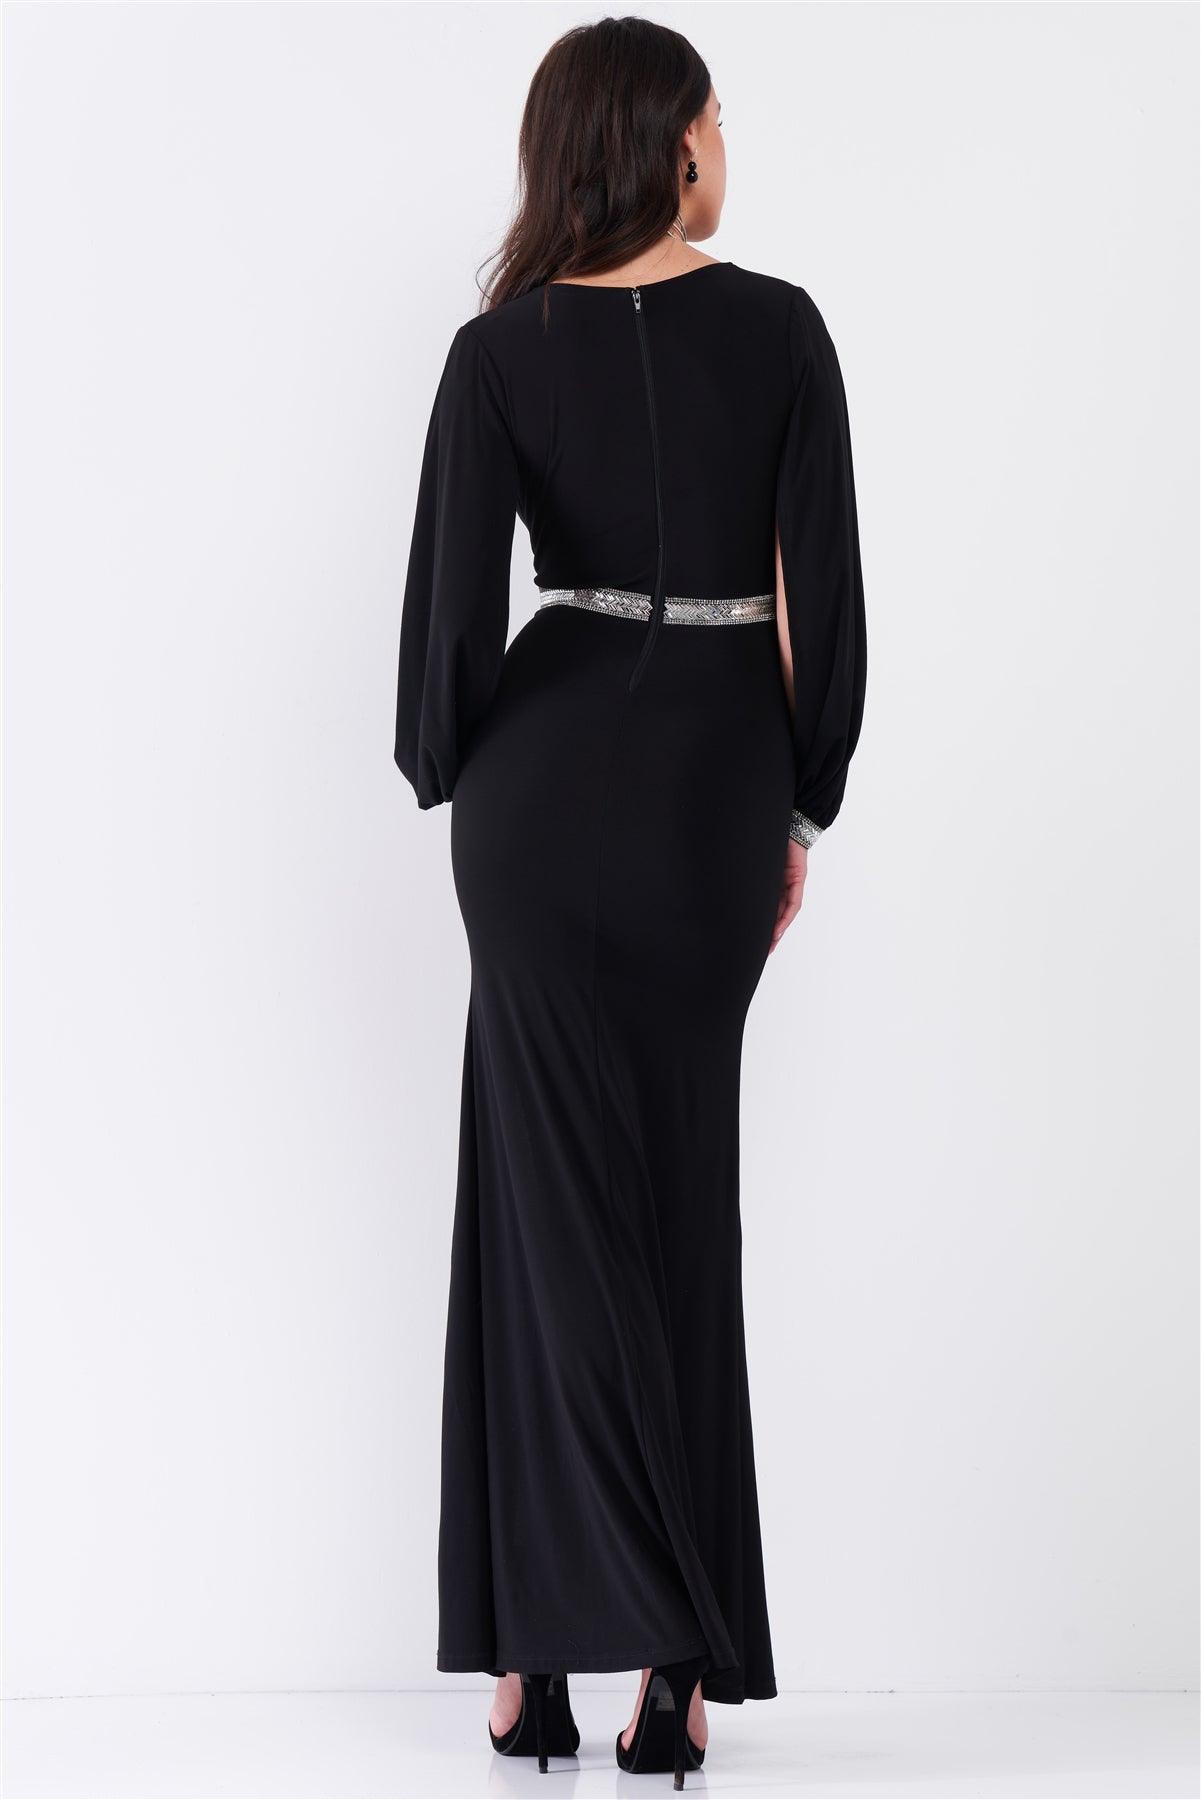 Black Deep Plunged V-Neck Long Slit Sleeve Rhinestone Decorated Waist And Wrist Side Slit Maxi Dress